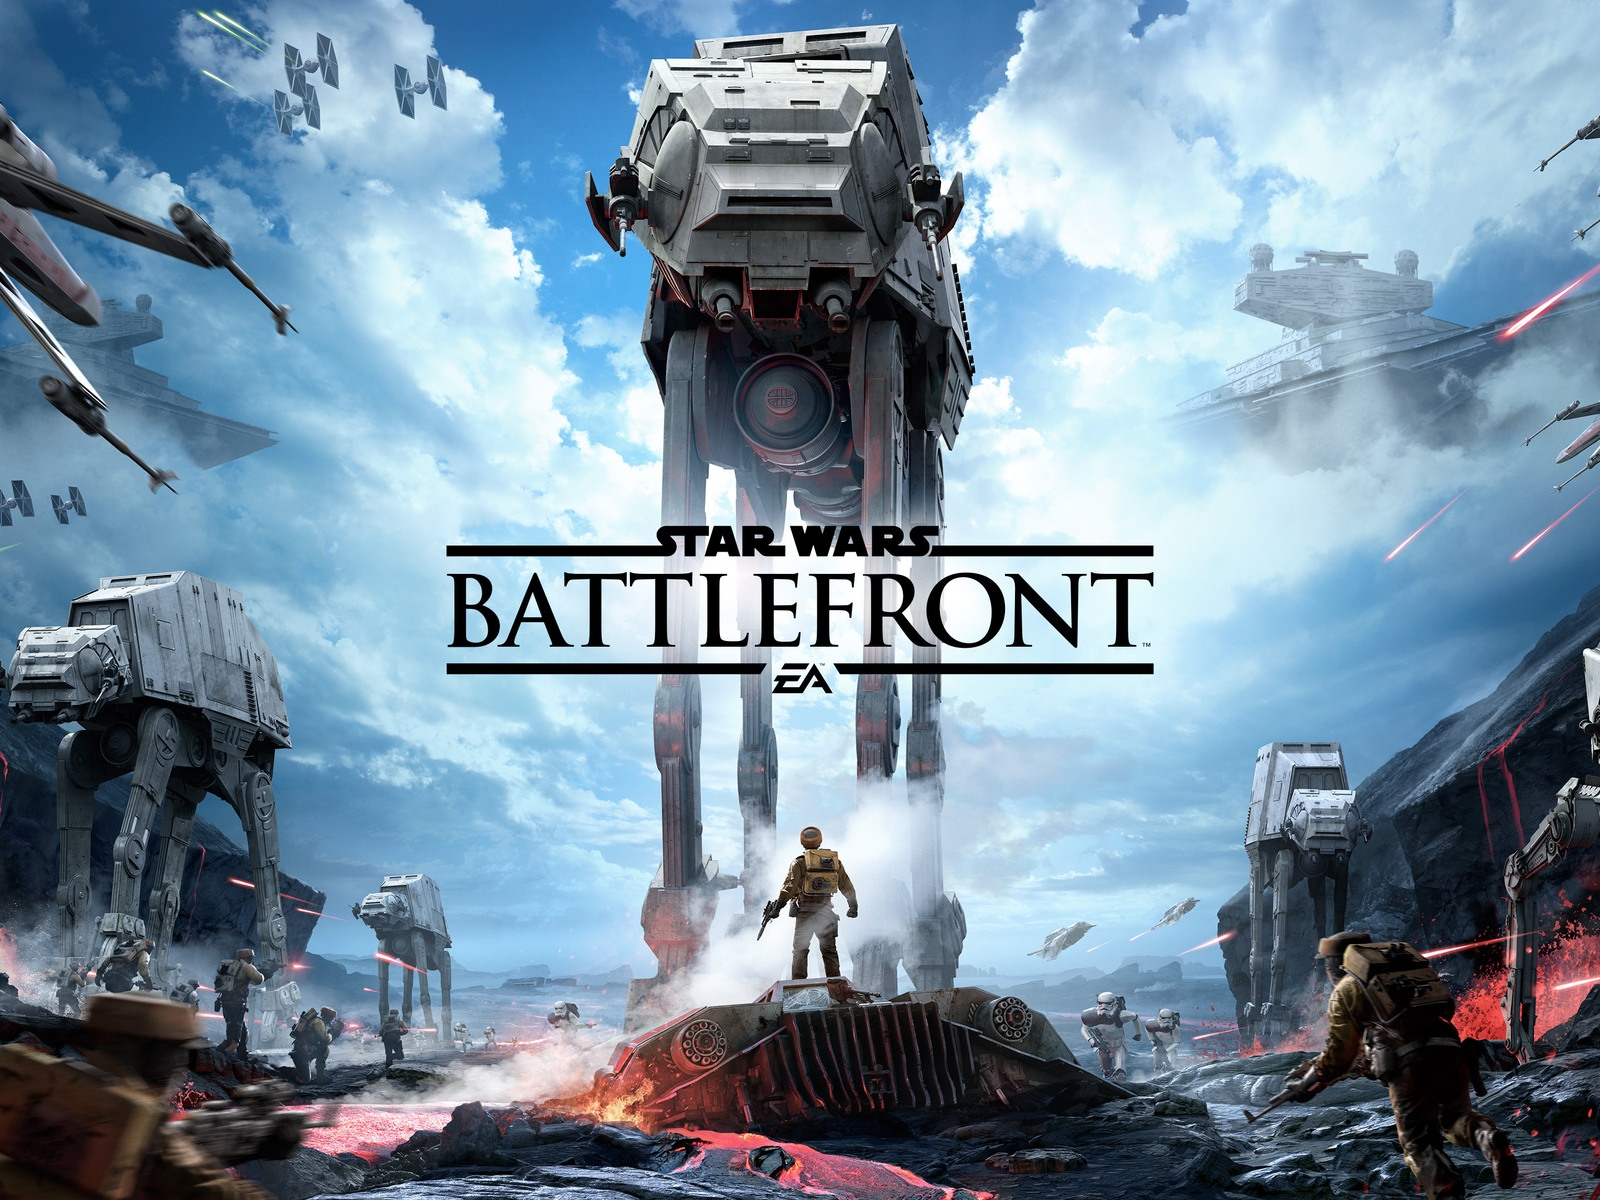 Star Wars Battlefront Poster for 1600 x 1200 resolution